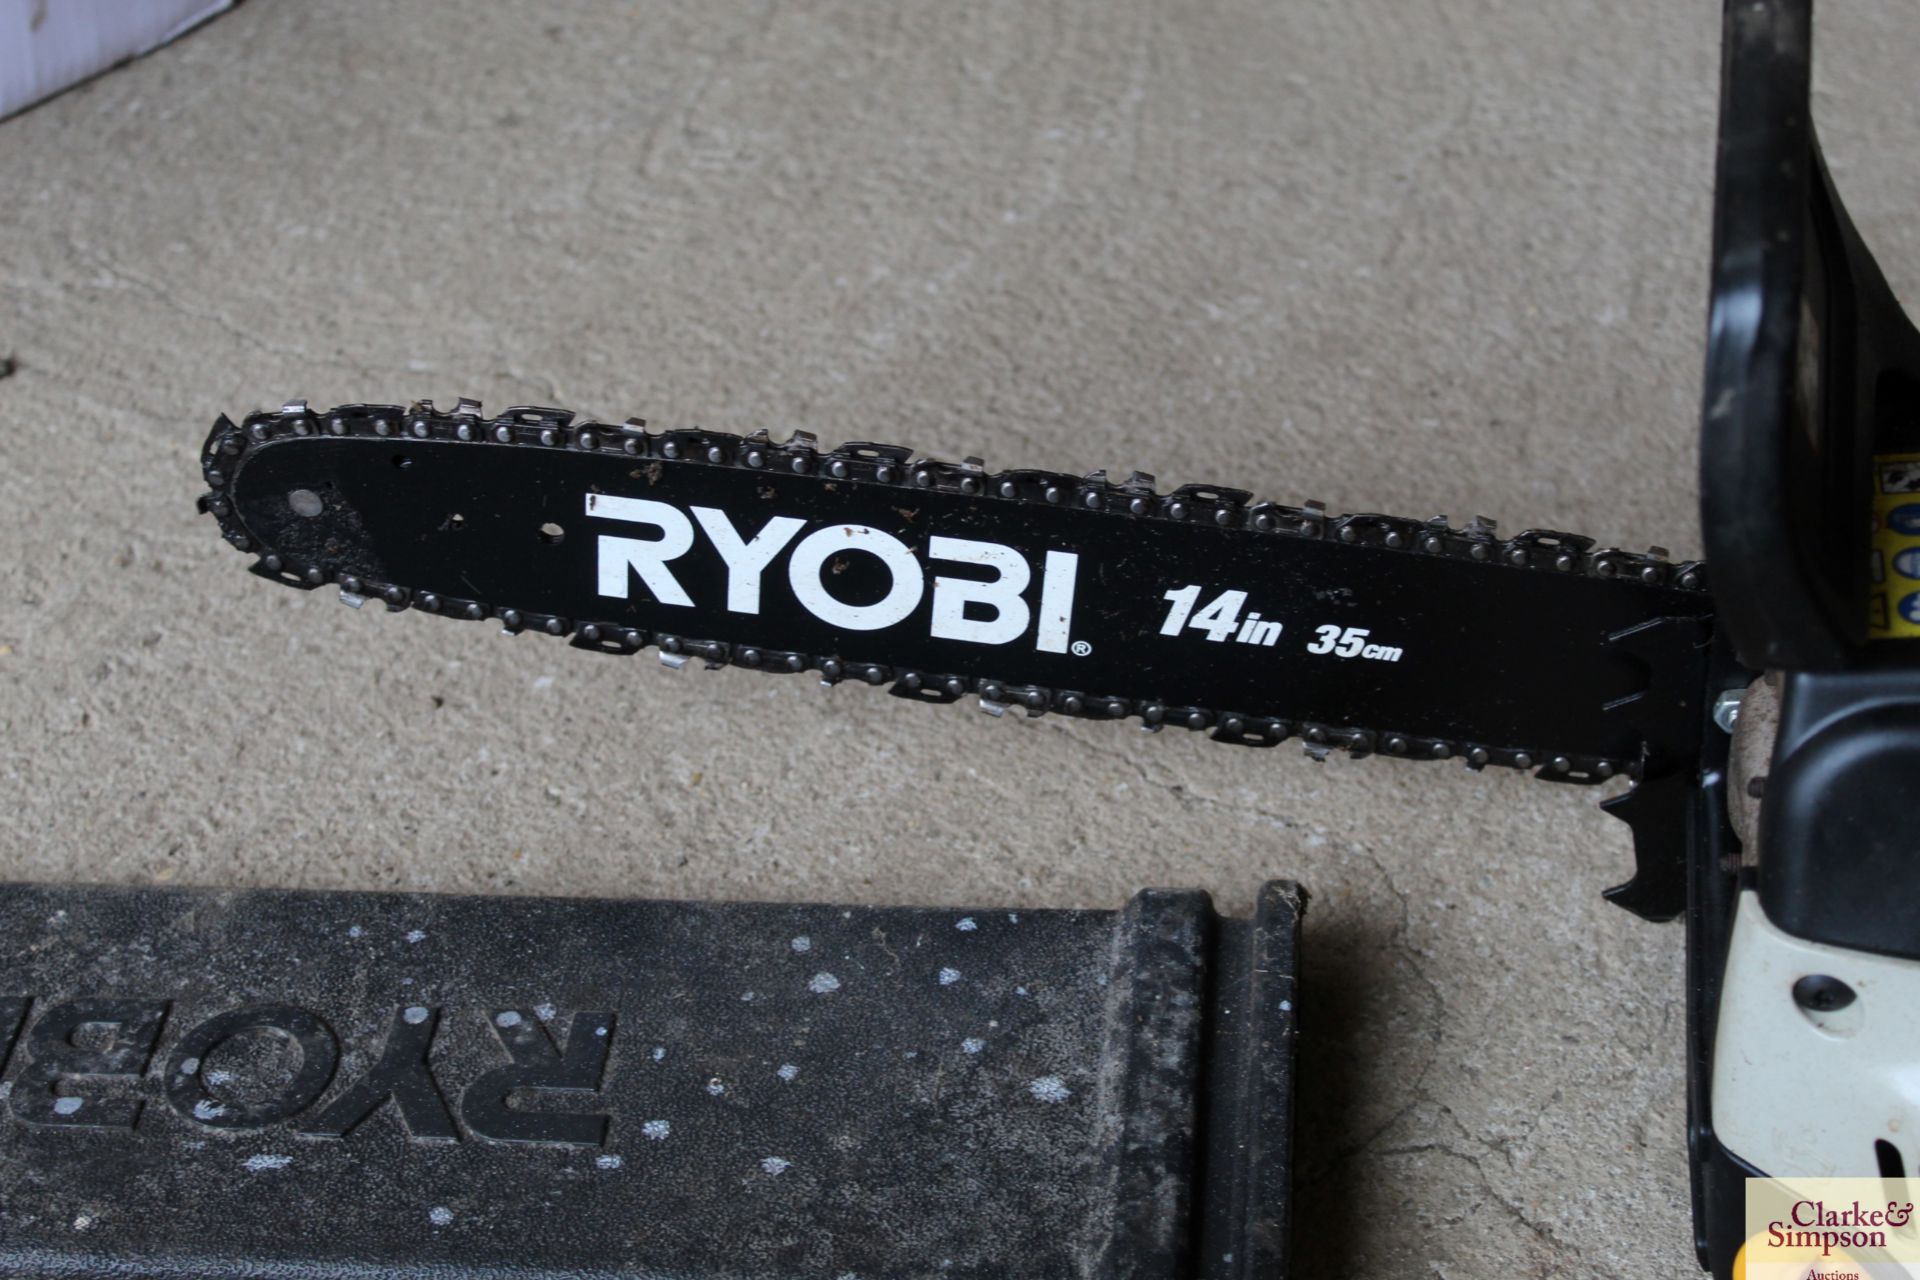 Ryobi chain saw. - Image 4 of 4